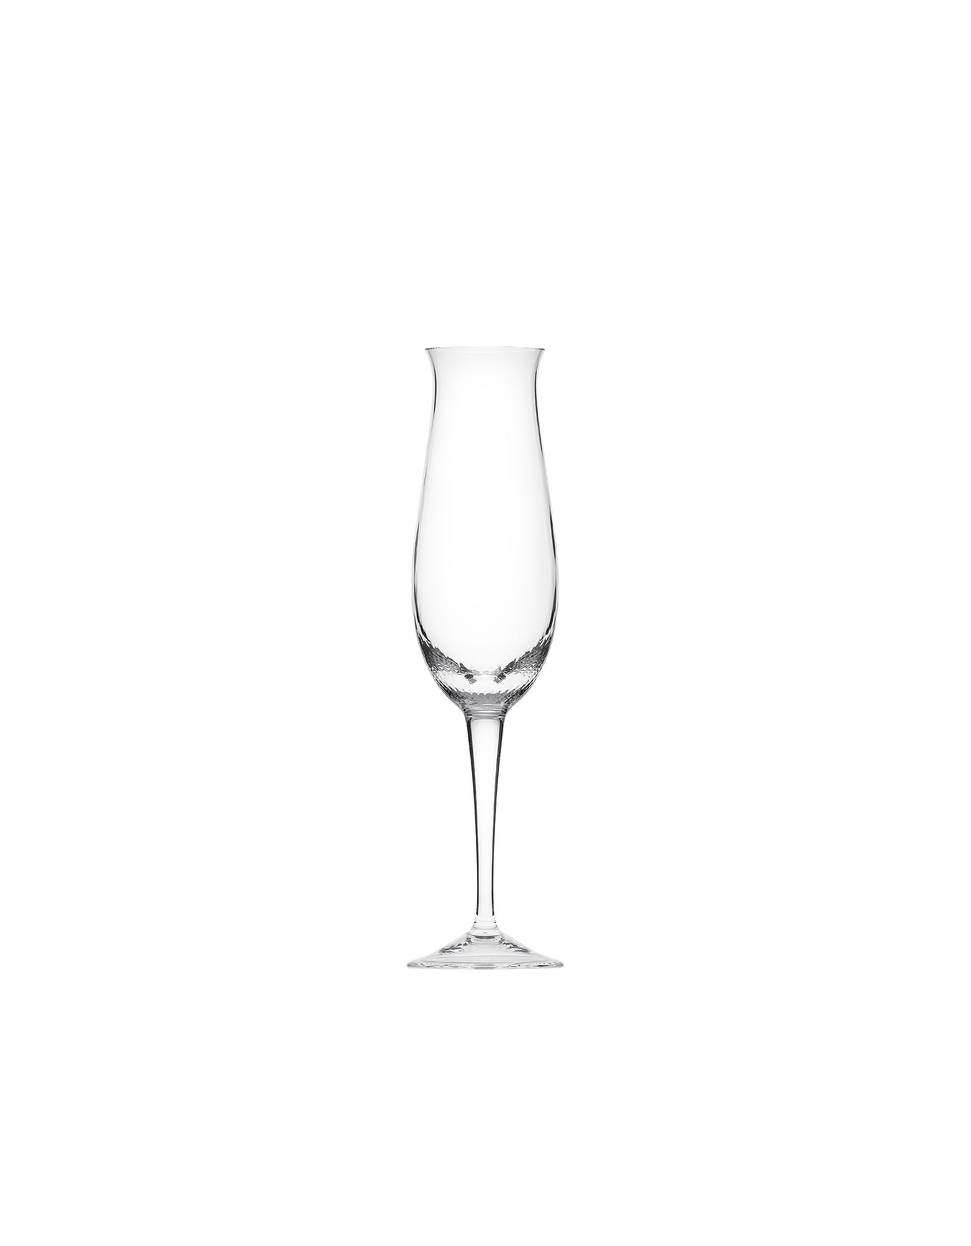 Wellenspiel champagne glass, 170 ml